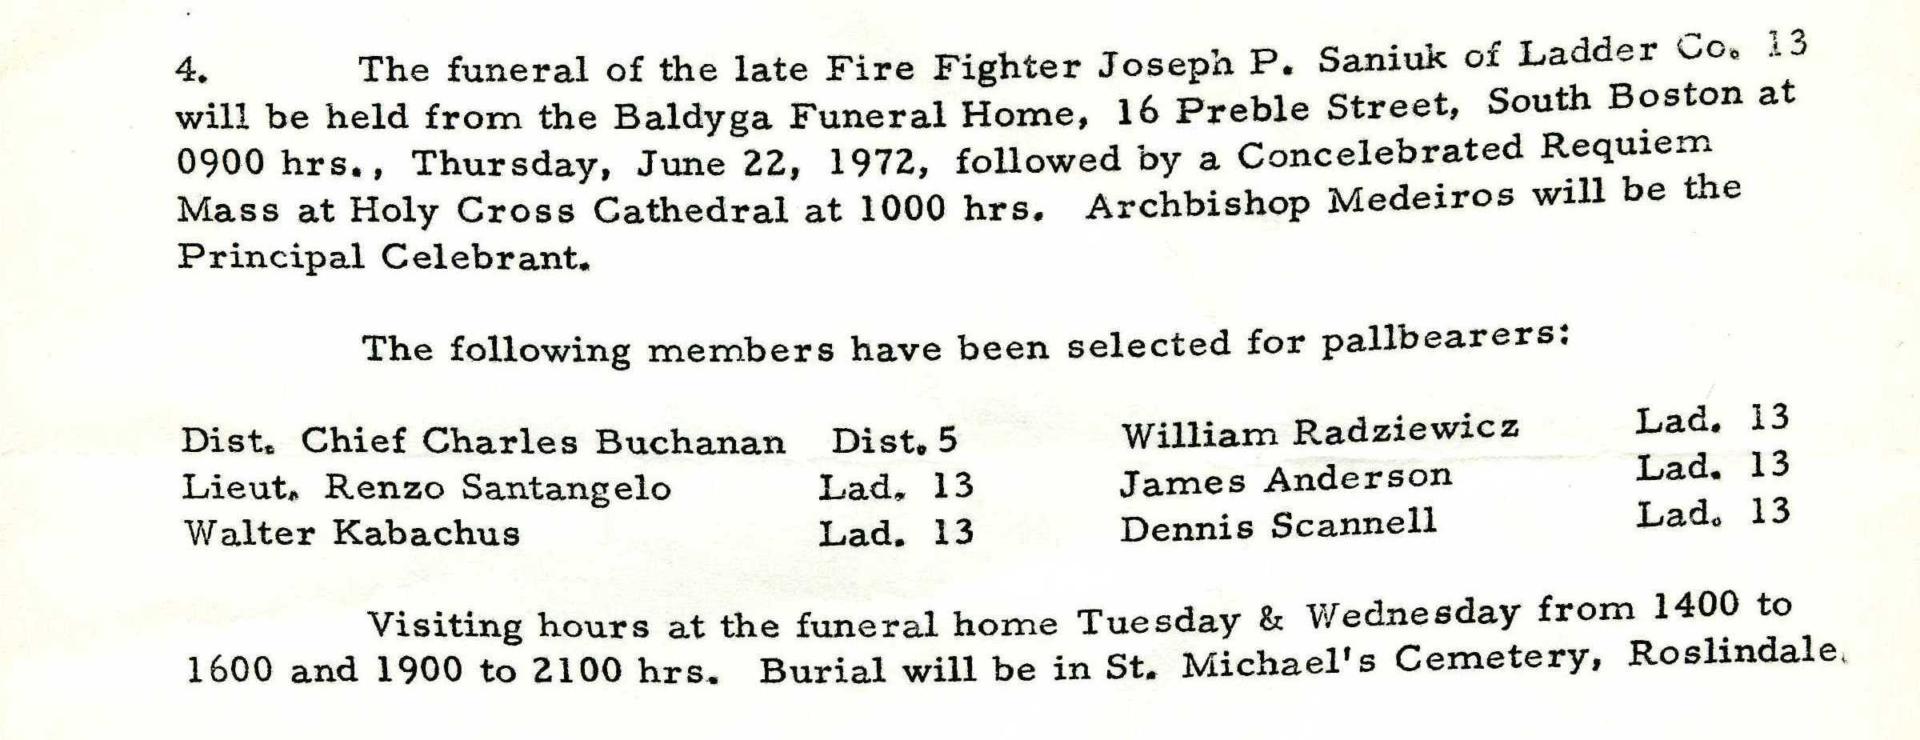 Funeral detail for Fire Fighter Joseph P. Saniuk.